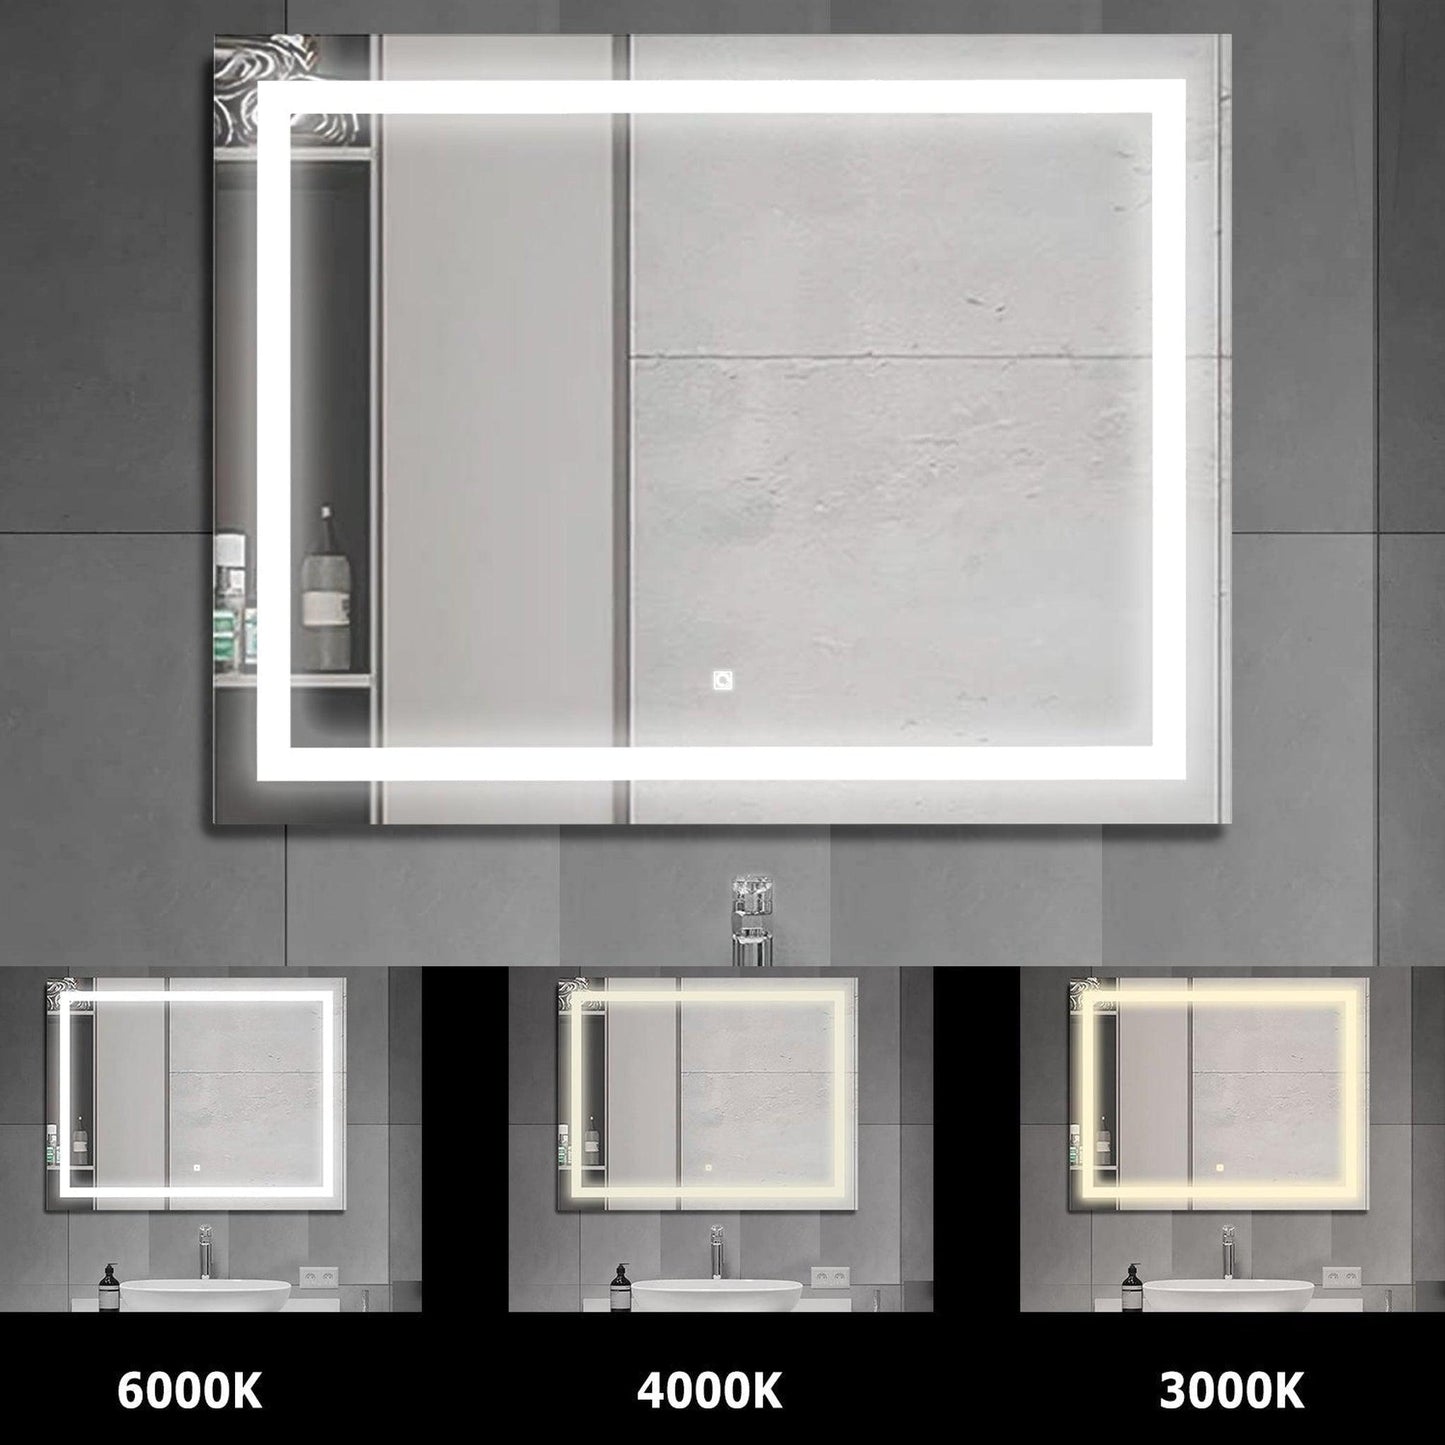 Clovis Goods 36" x 28" Frameless Rectangular Wall Mounted Bathroom Vanity LED Lighted Mirror With Touch Sensor and Built-in Defogger